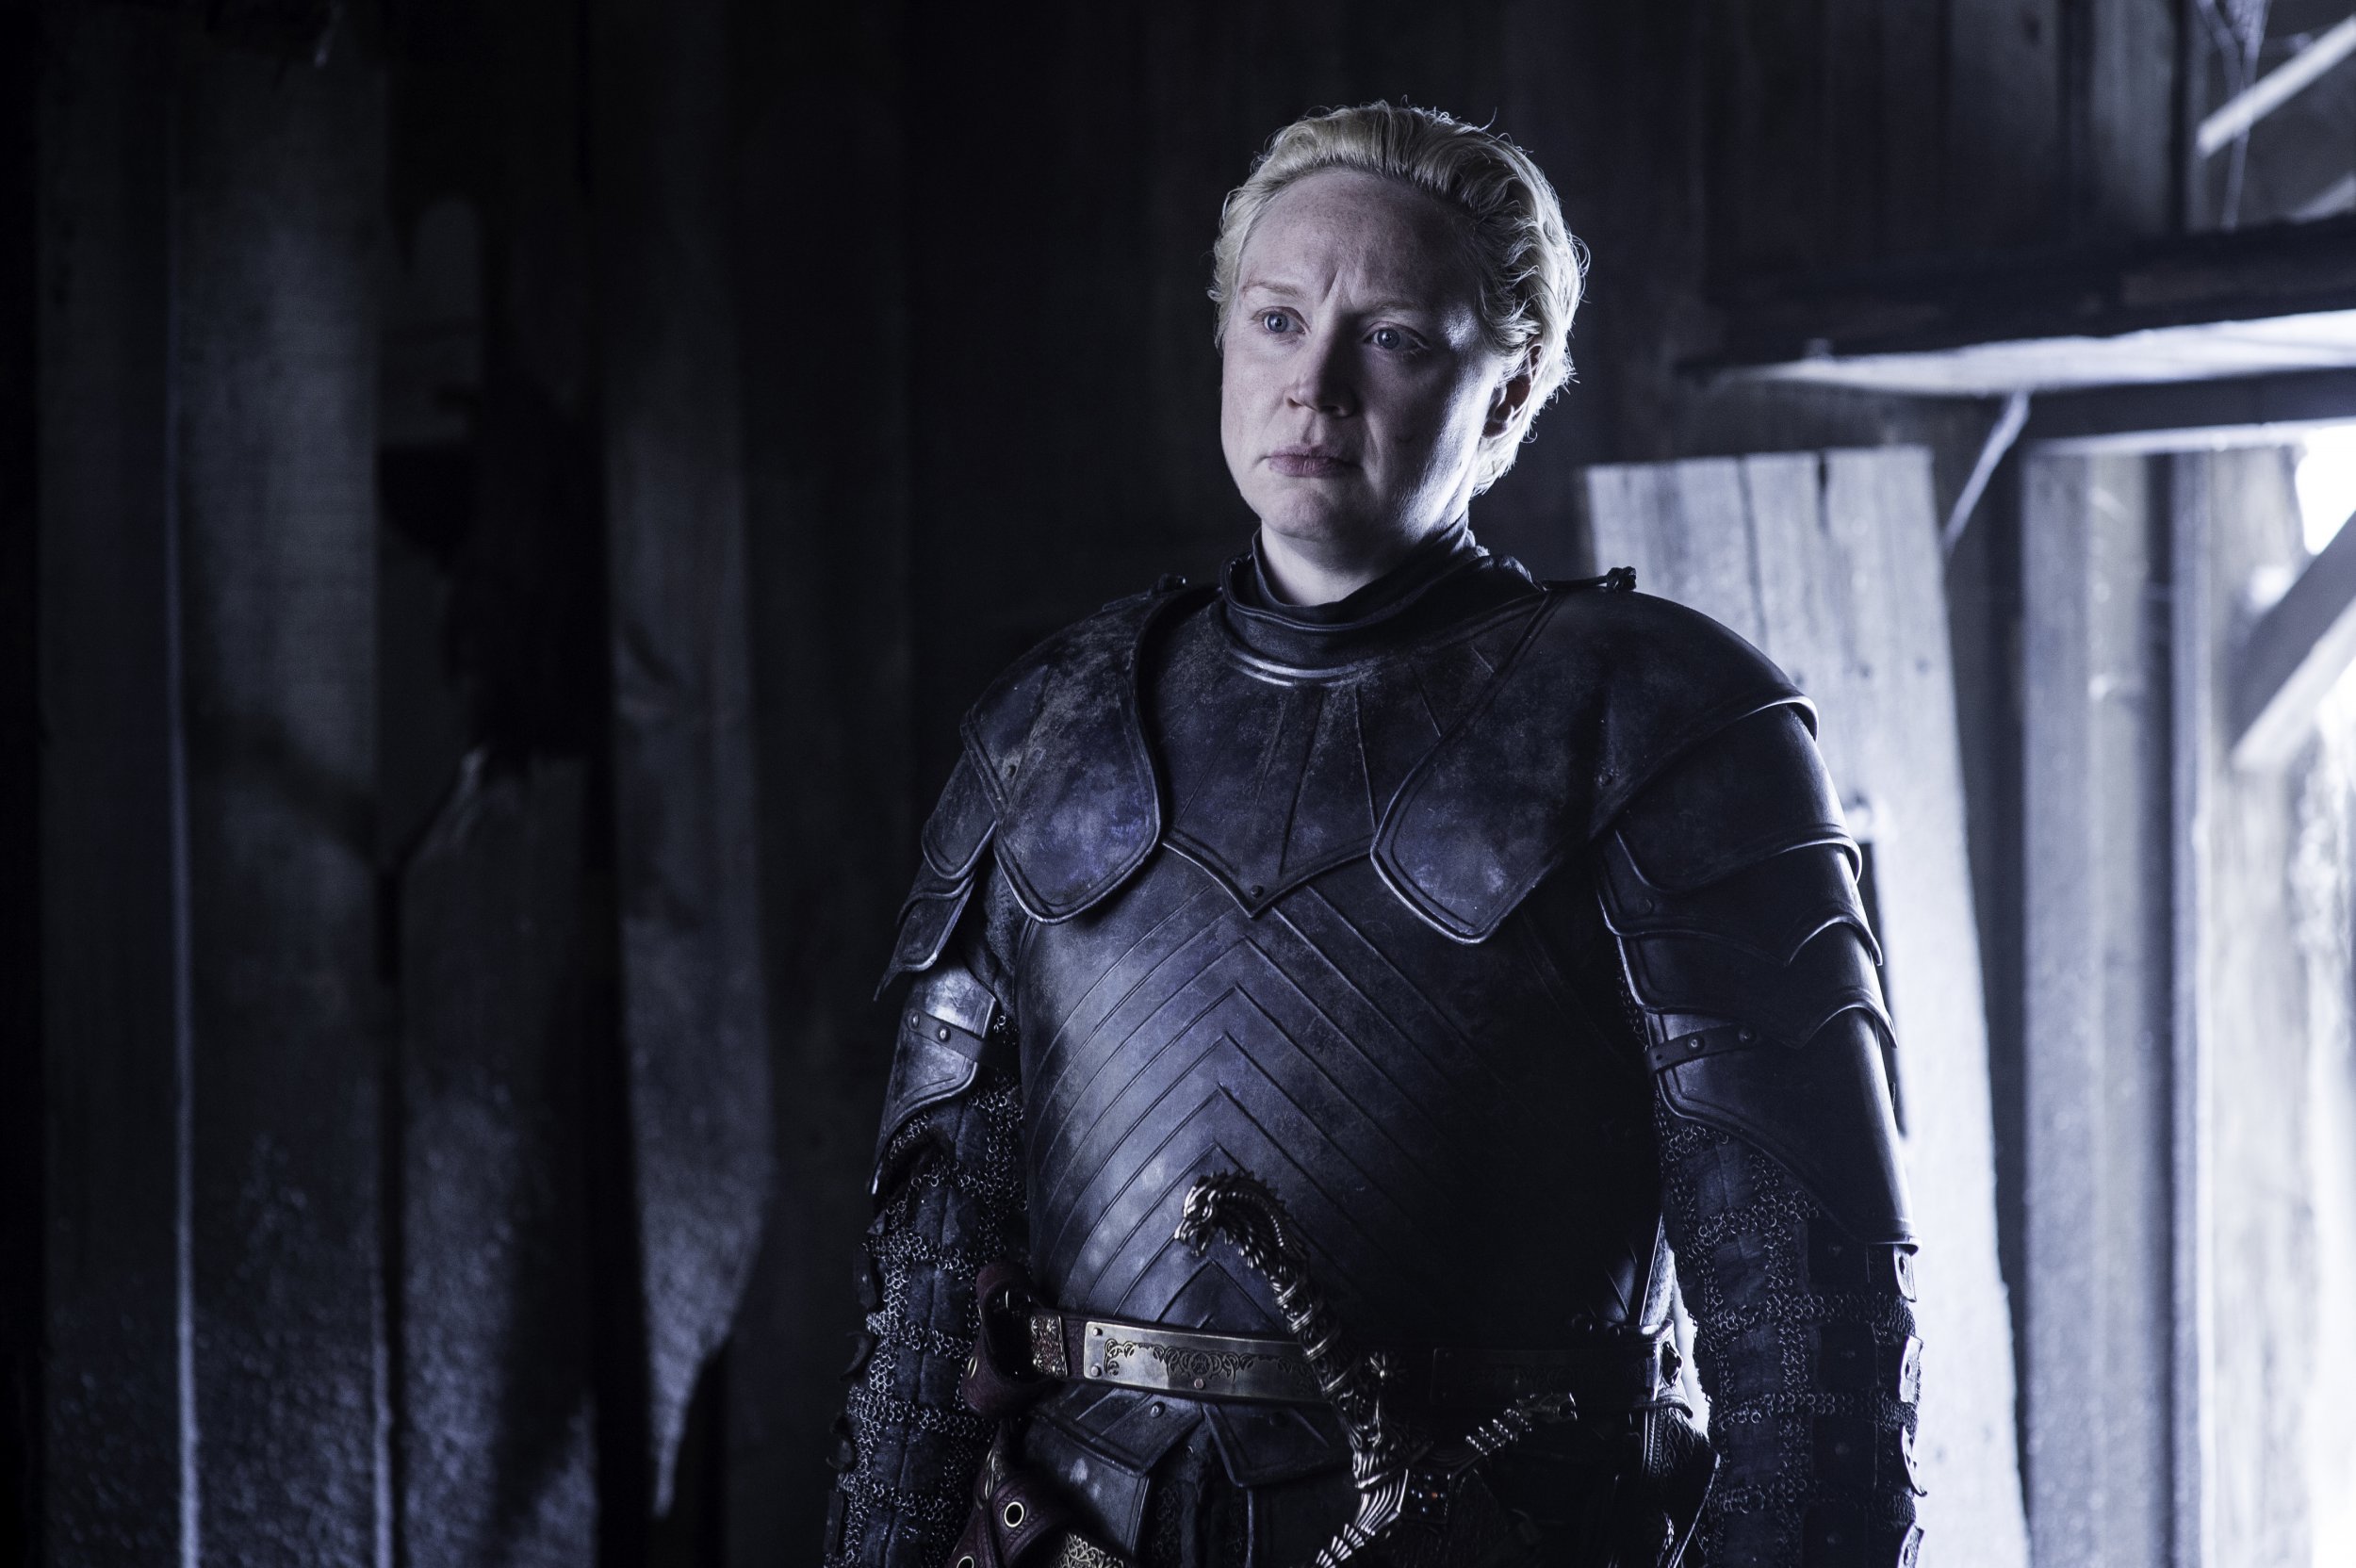 Gwendoline Christie as Brienne of Tarth in Game of Thrones